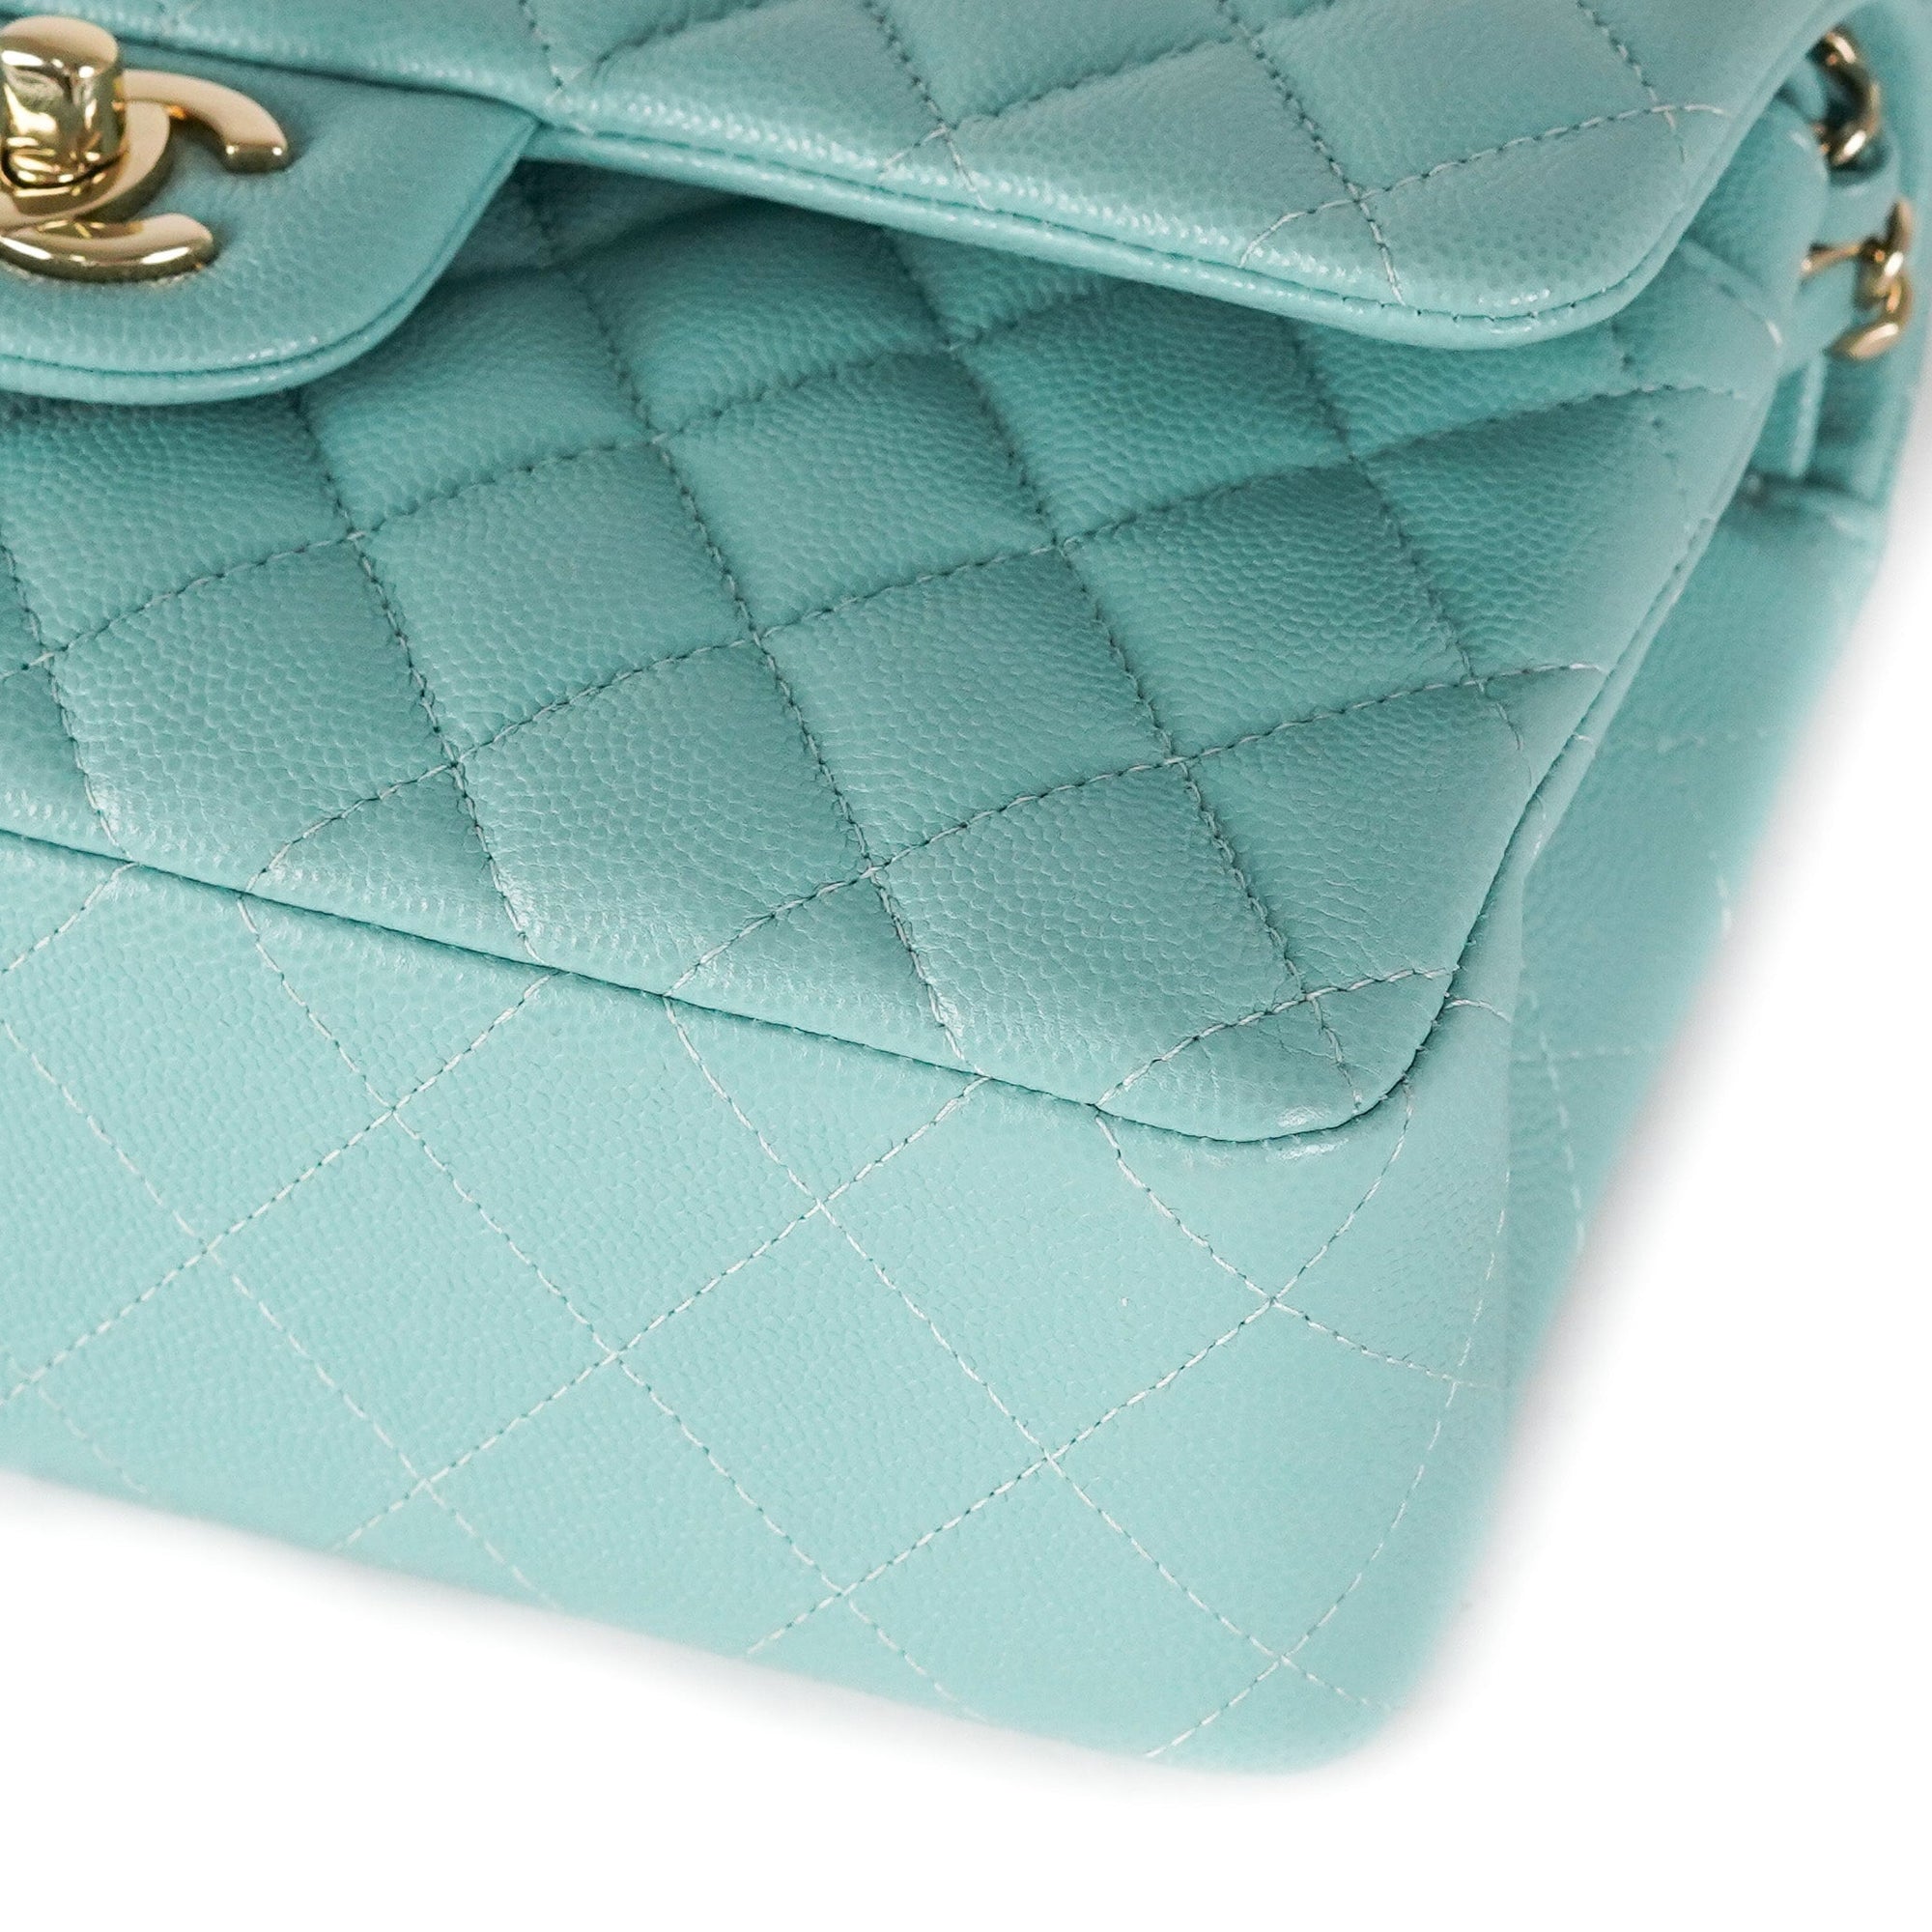 Chanel Jumbo Tiffany Blue - Designer WishBags